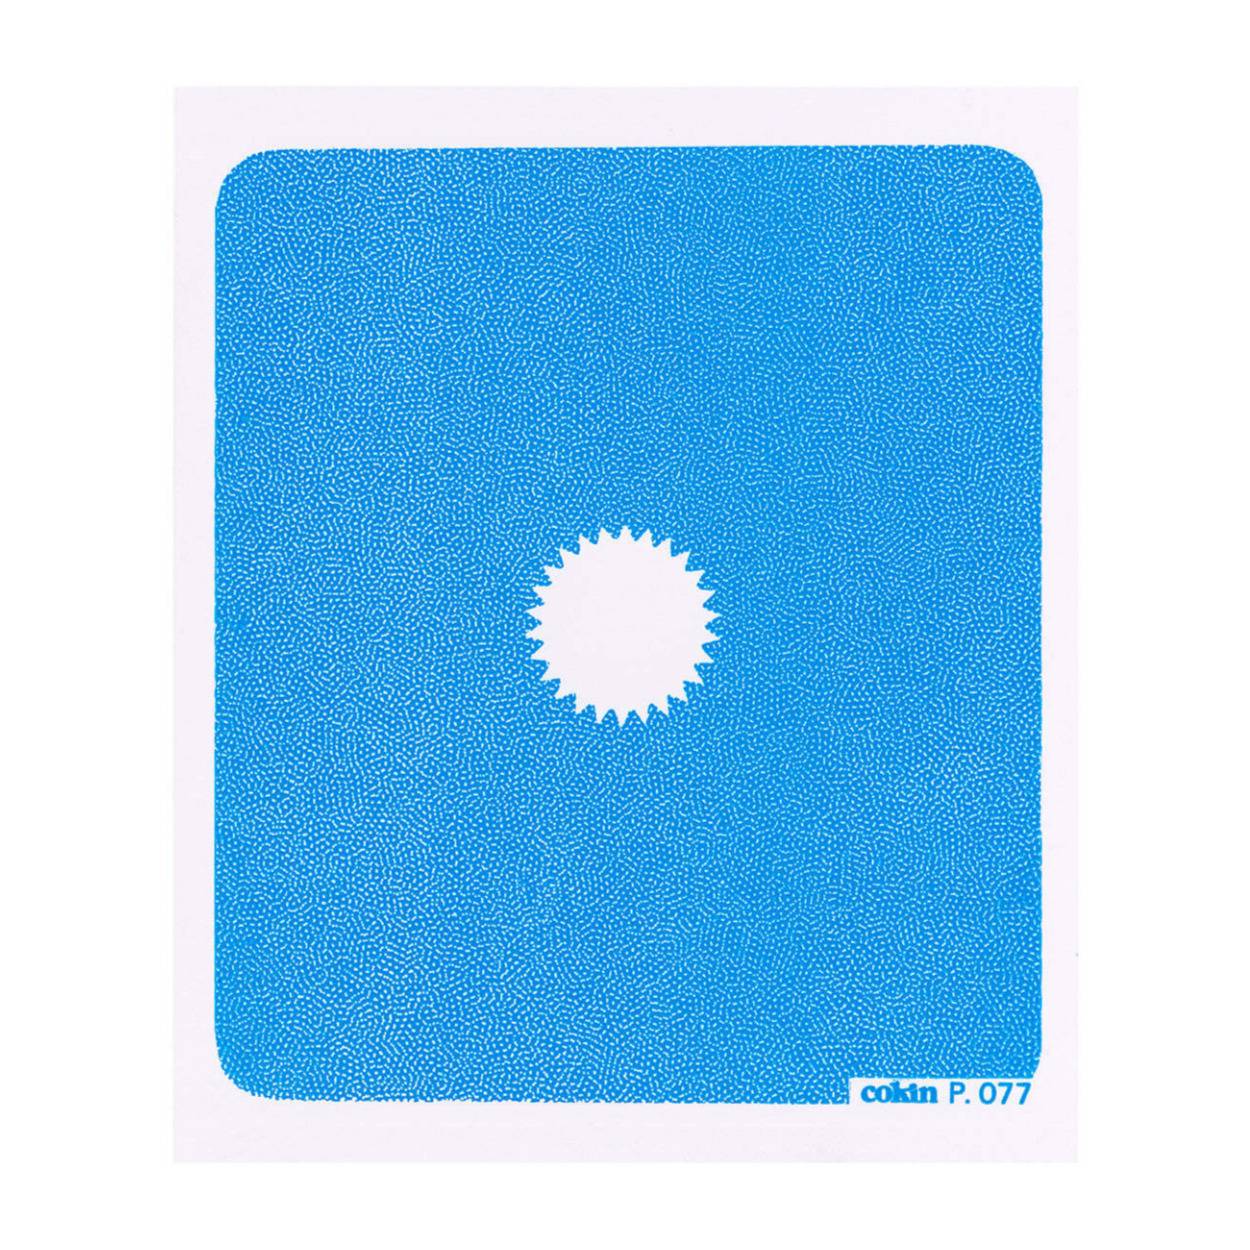 Cokin P077 Center Spot Wide Angle Filter (Blue)